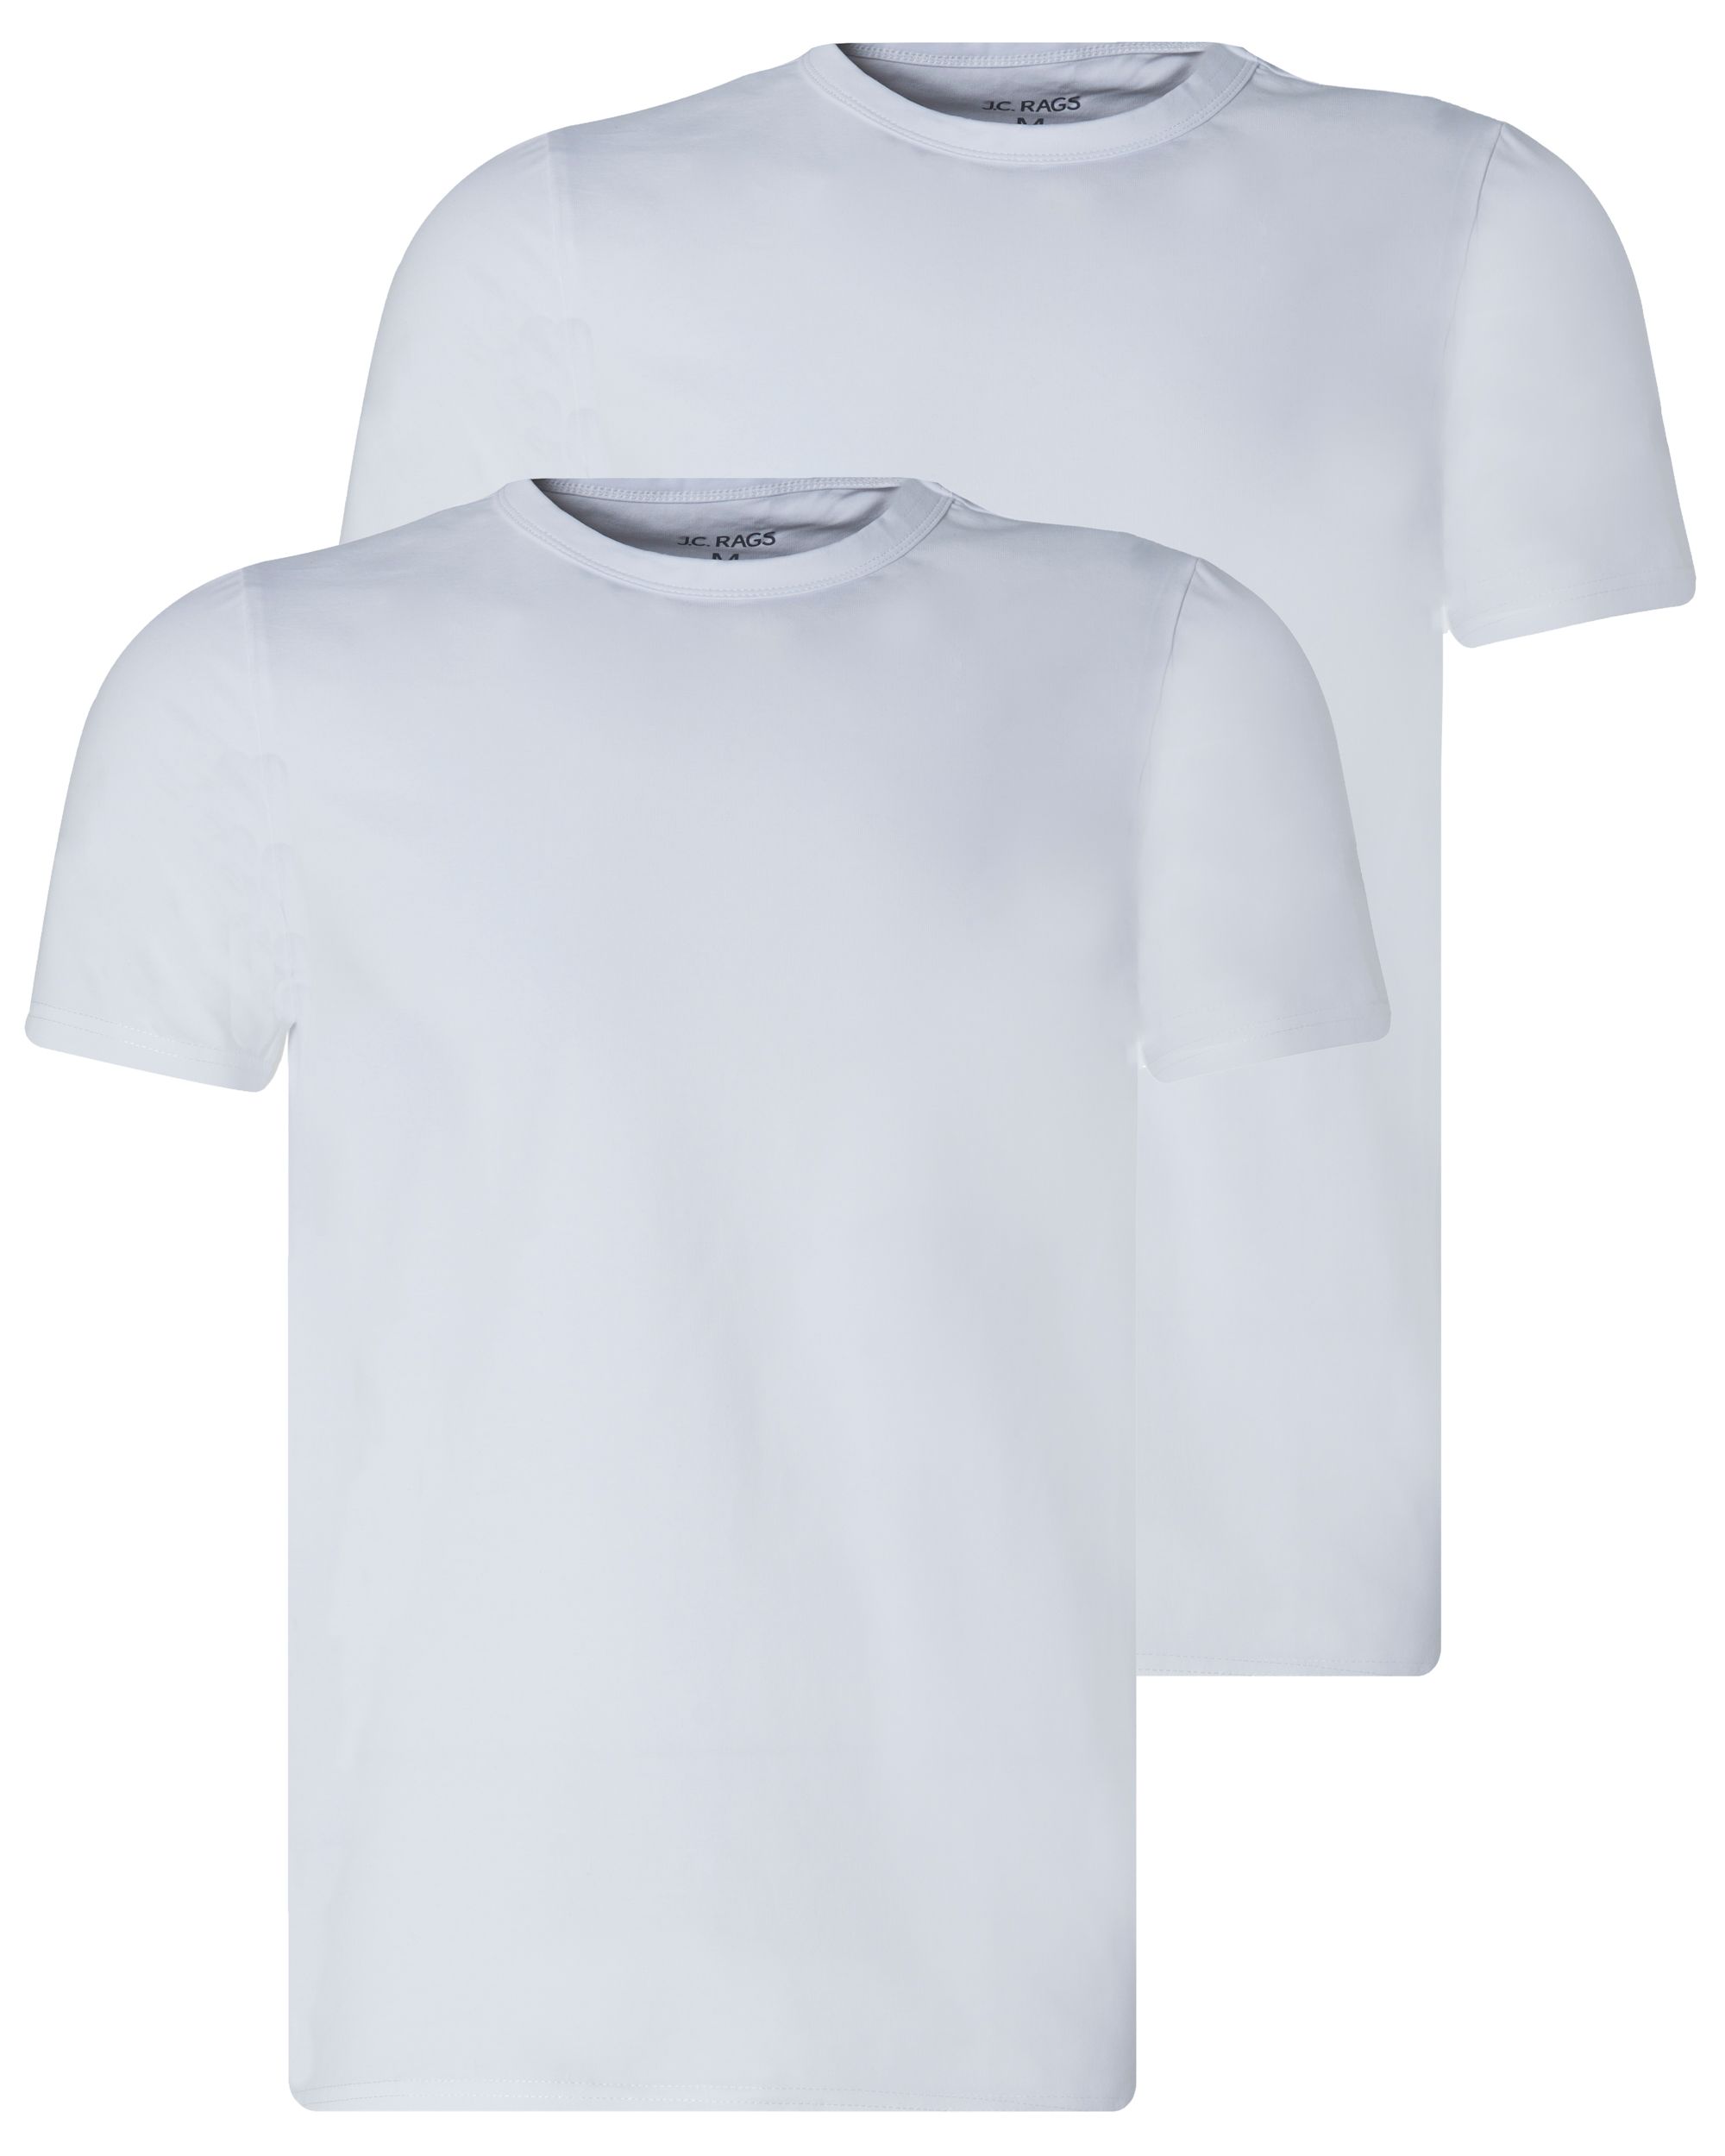 J.C. RAGS Basic T-shirt KM 2-pack WHITE 081603-002-L